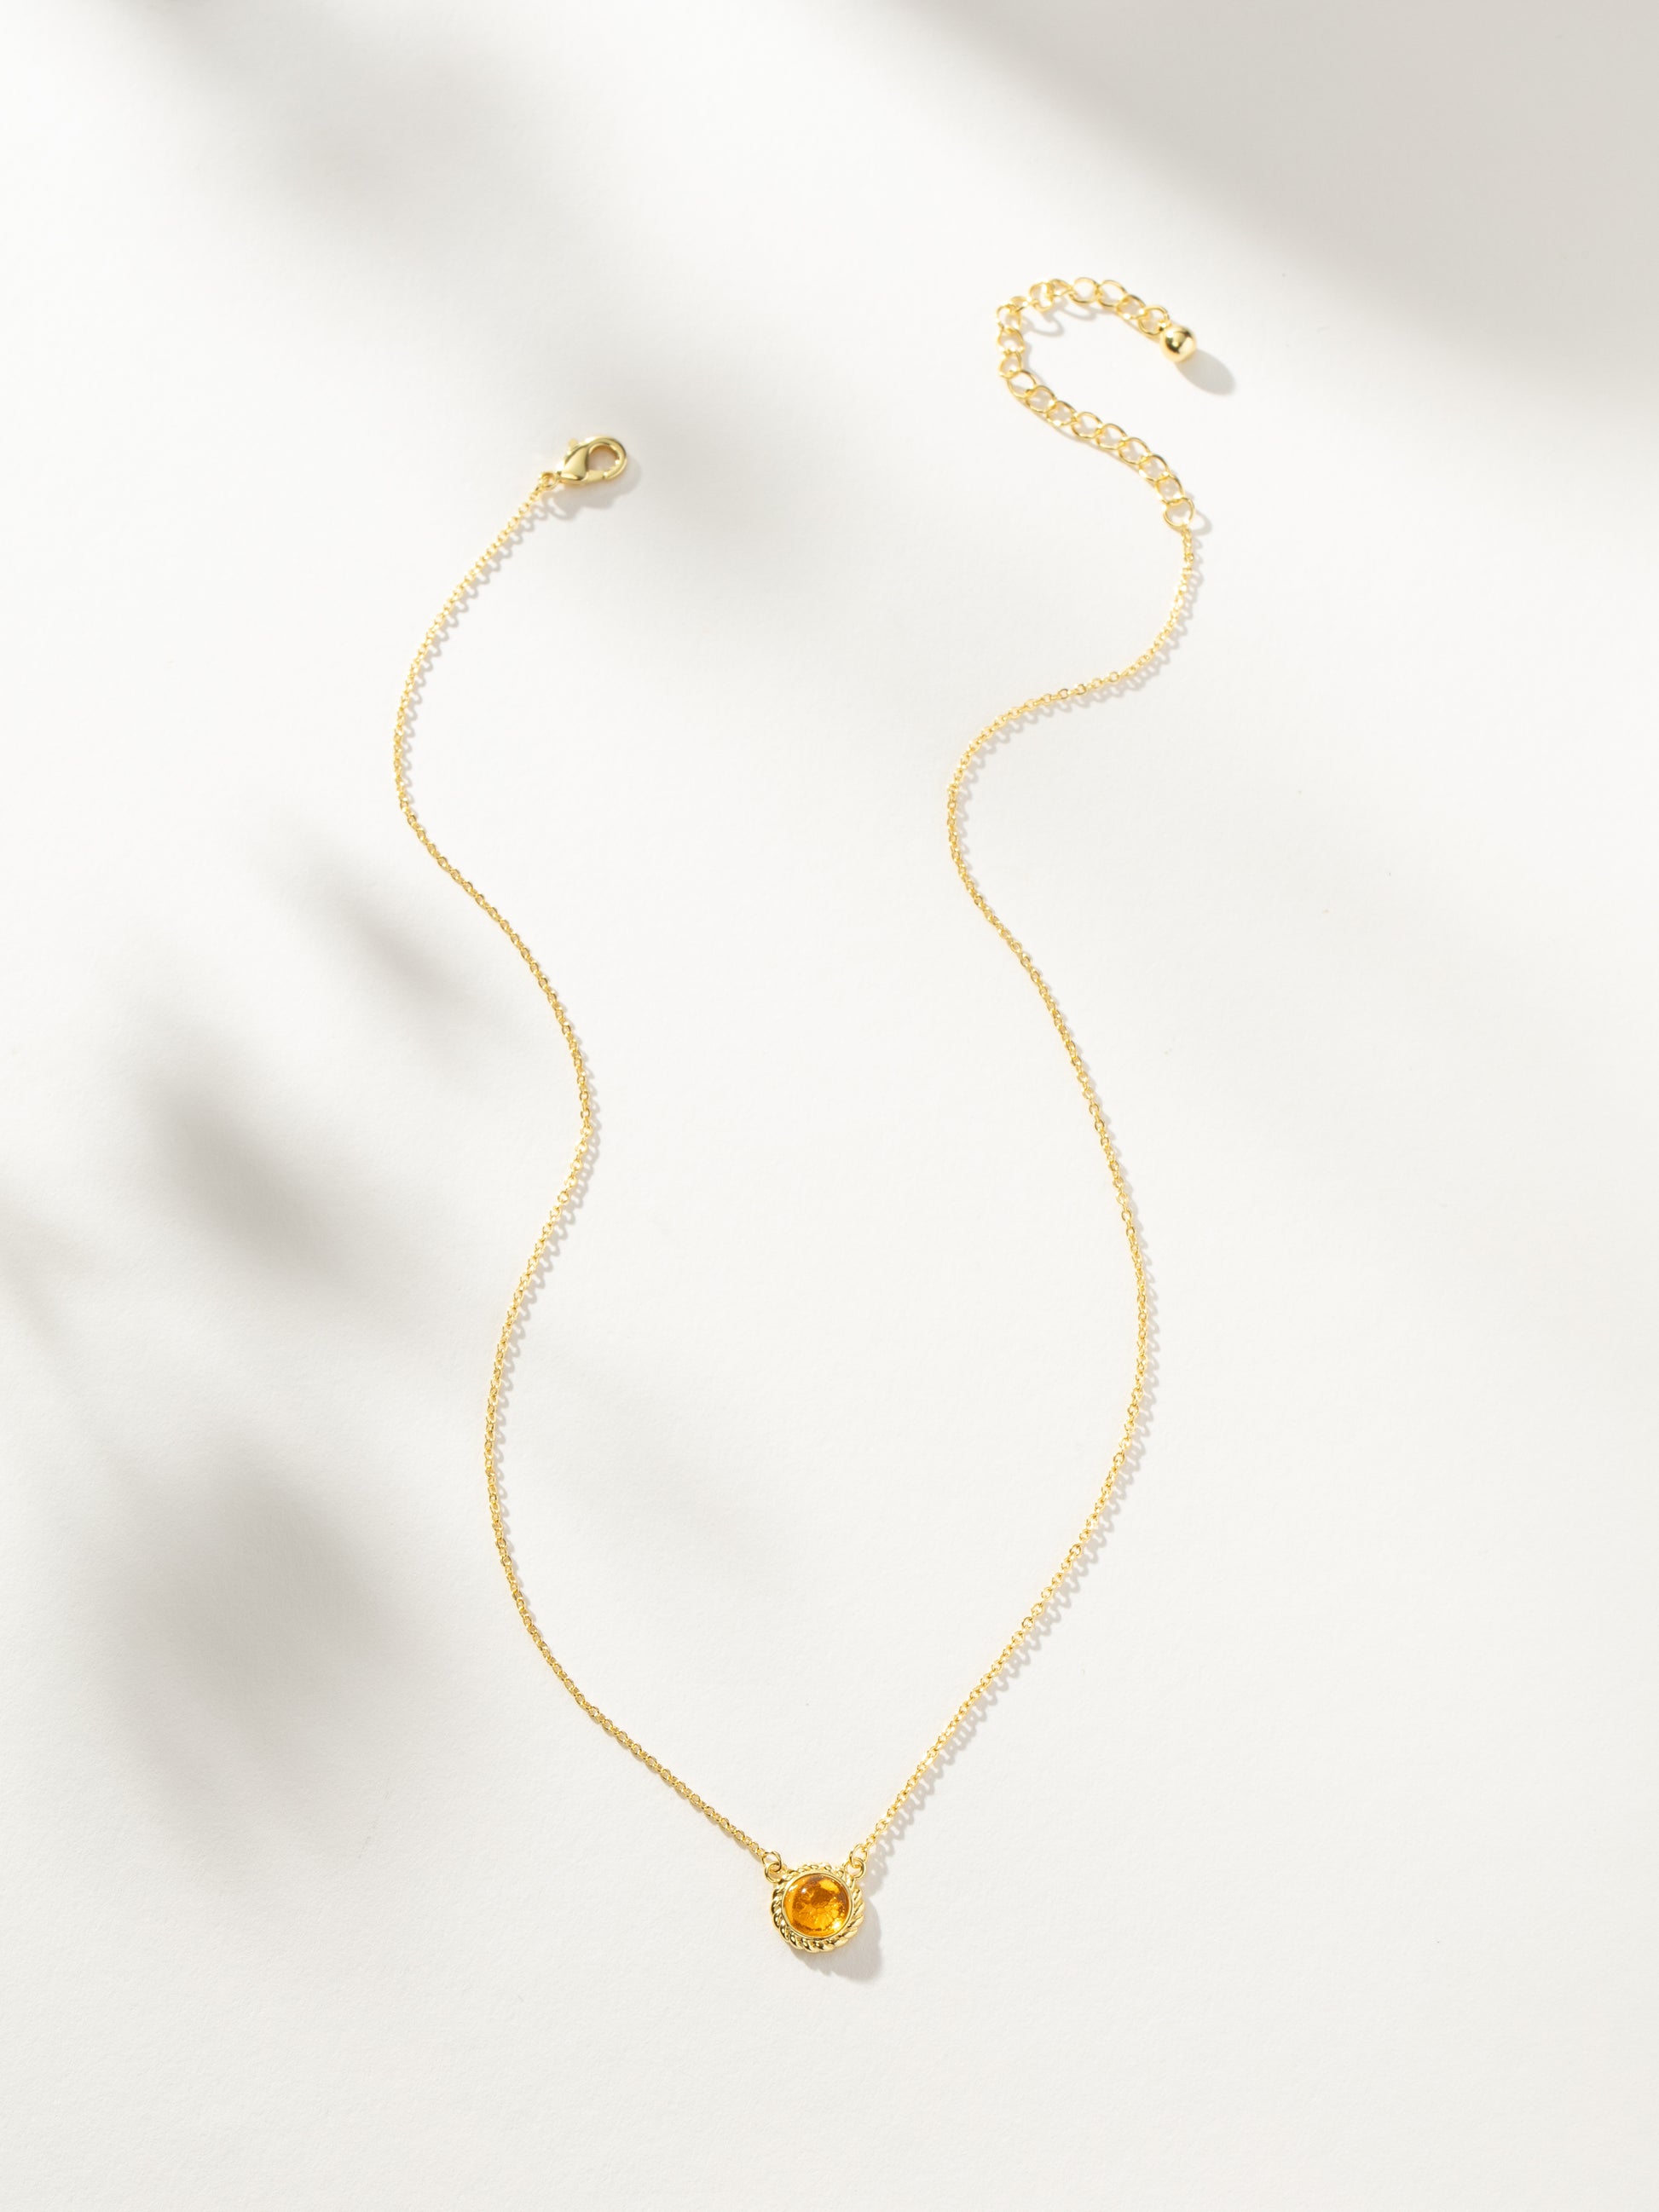 Wonderland Necklace | Gold | Product Image | Uncommon James